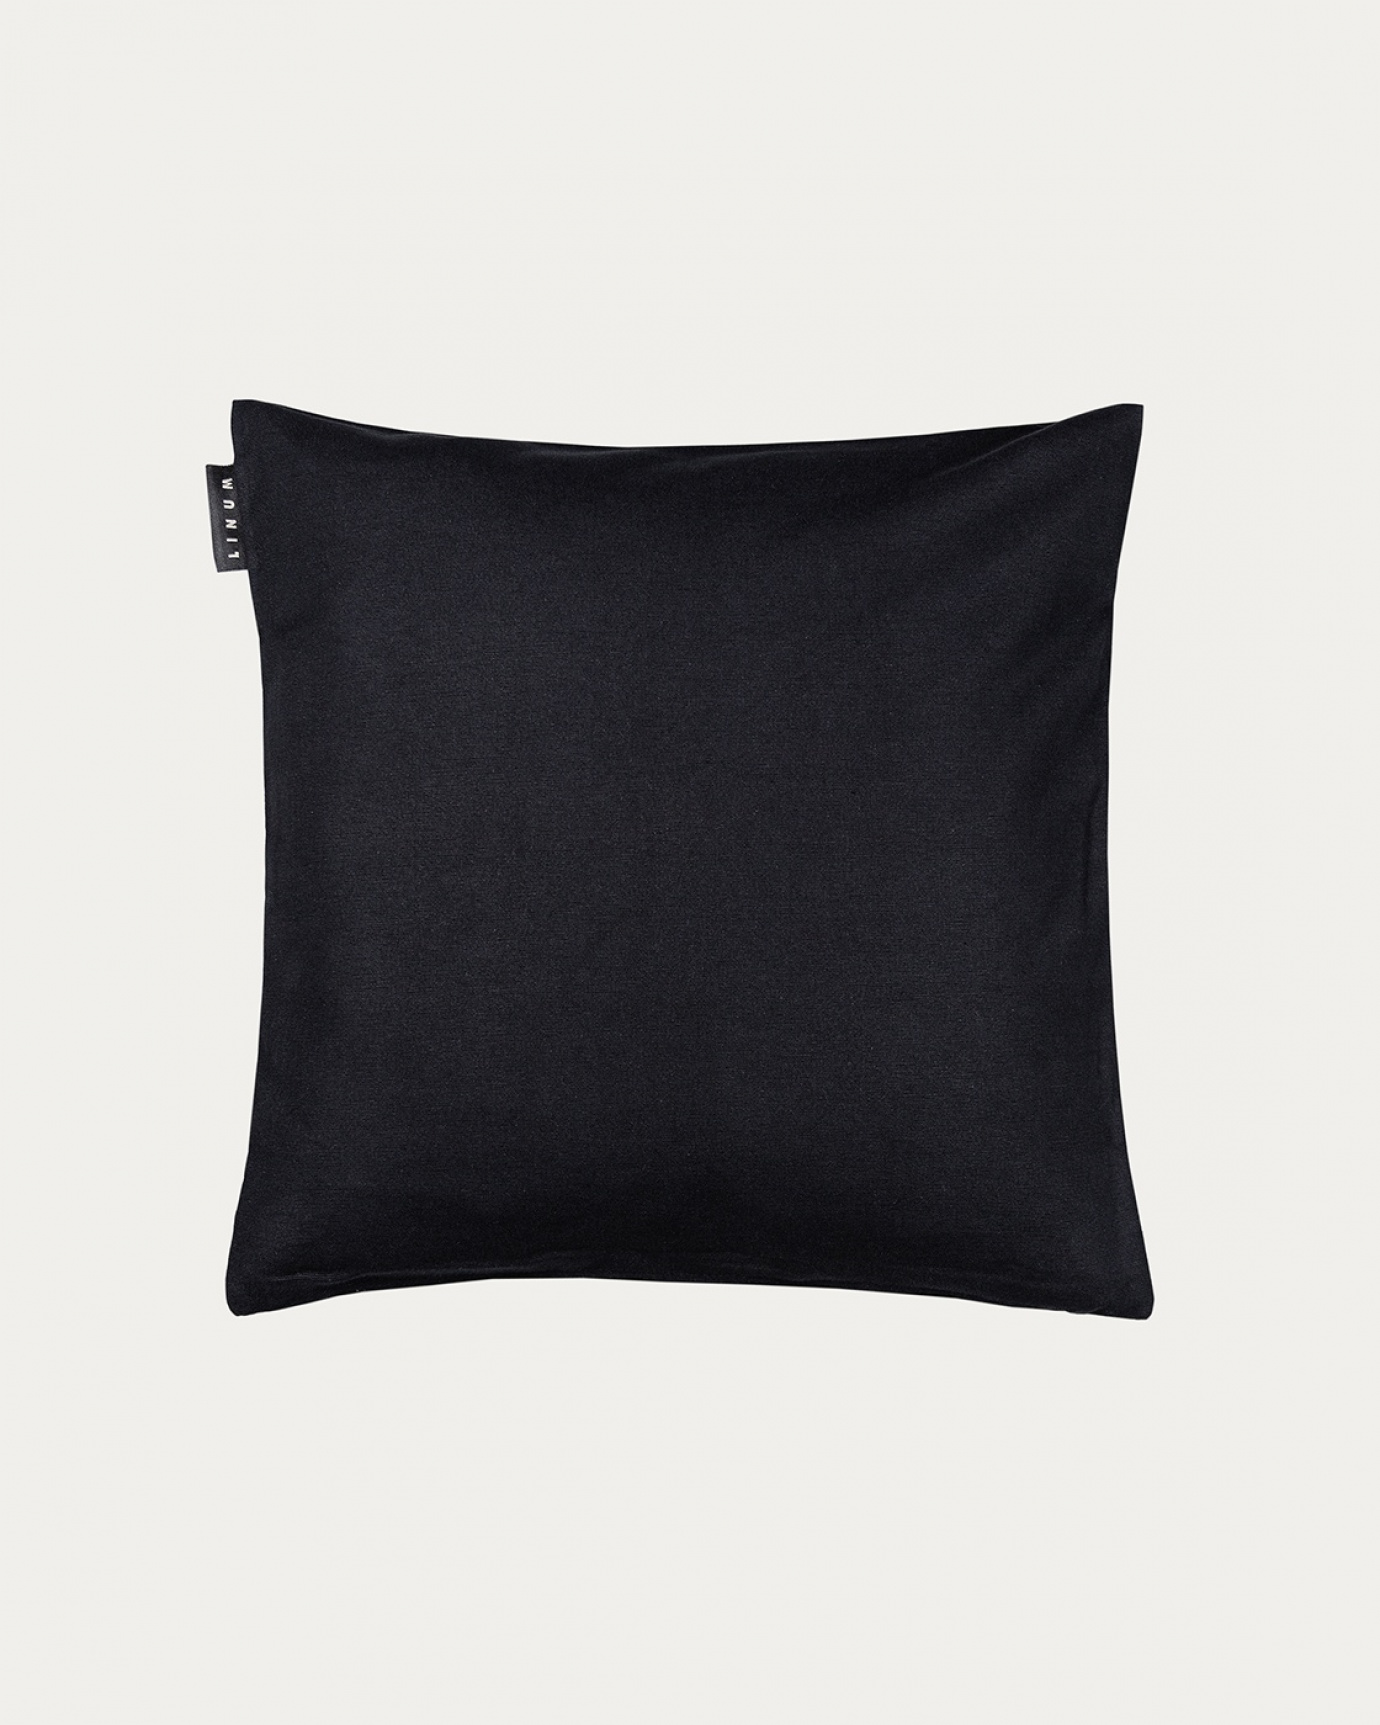 Produktbild svart ANNABELL kuddfodral av mjuk bomull från LINUM DESIGN. Storlek 40x40 cm.